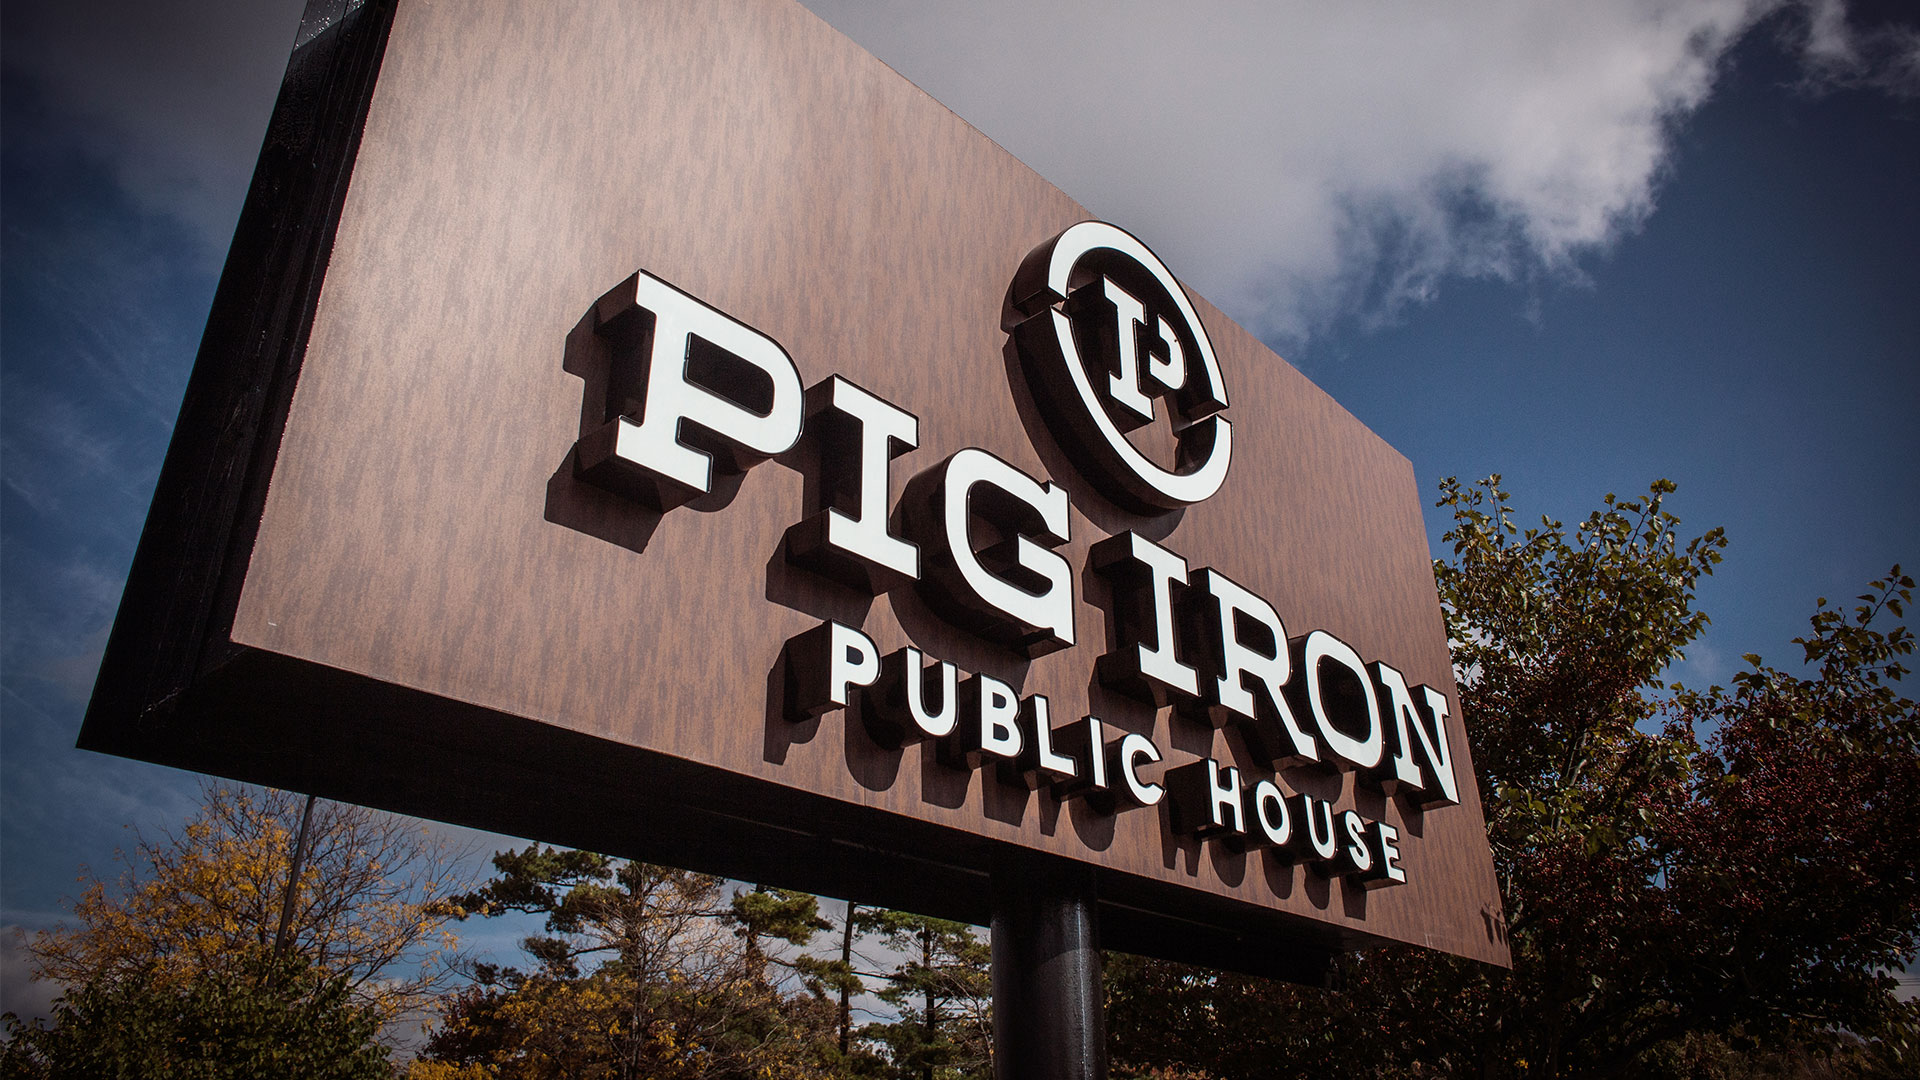 Pig Iron Public House exterior sign